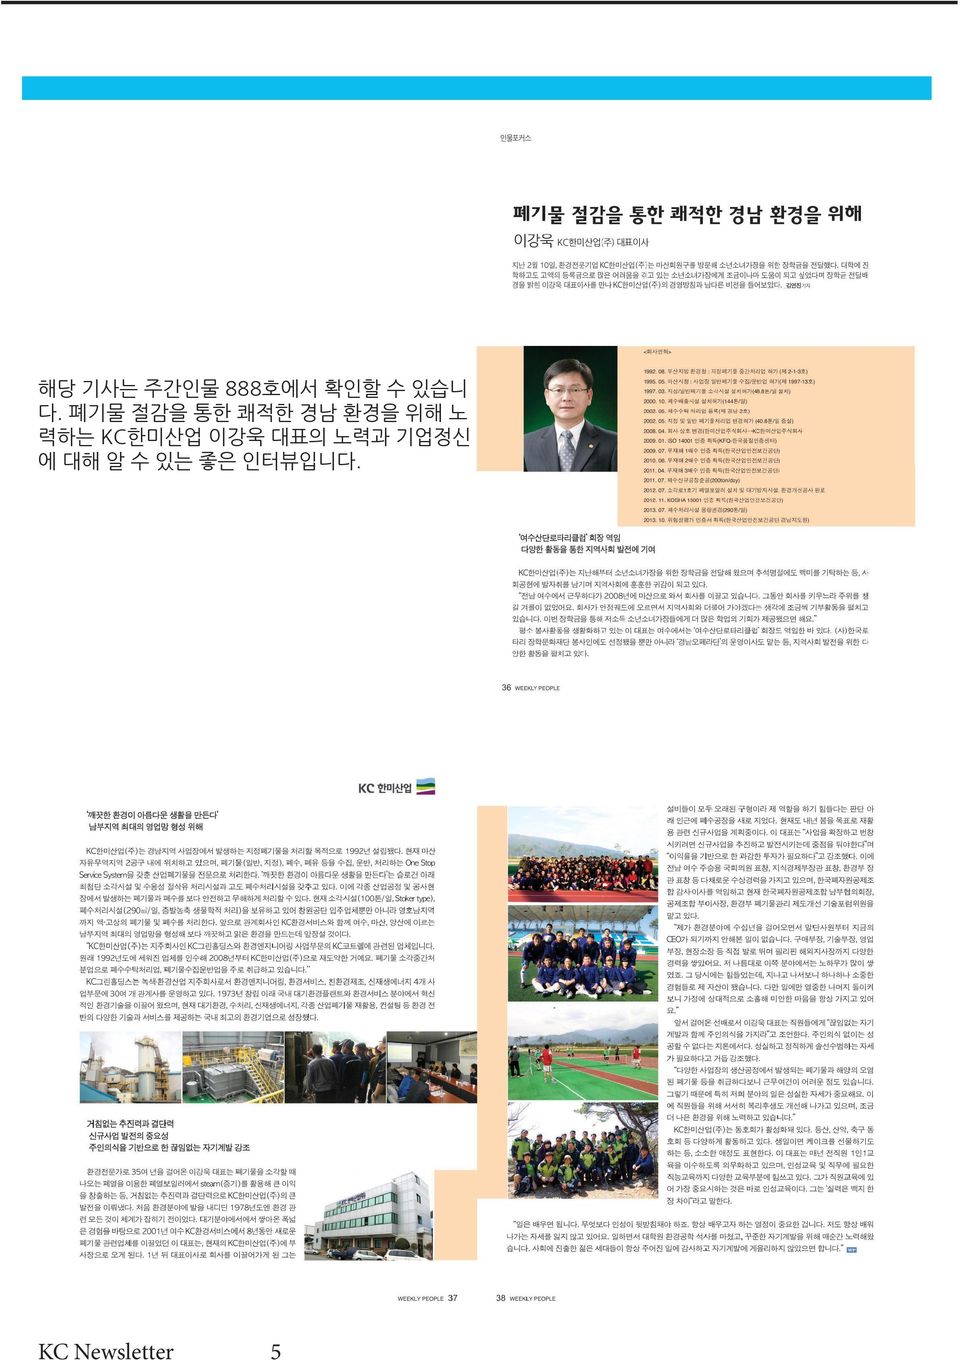 KC한미산업 이강욱 대표의 노력과 기업정신 에 대해 알